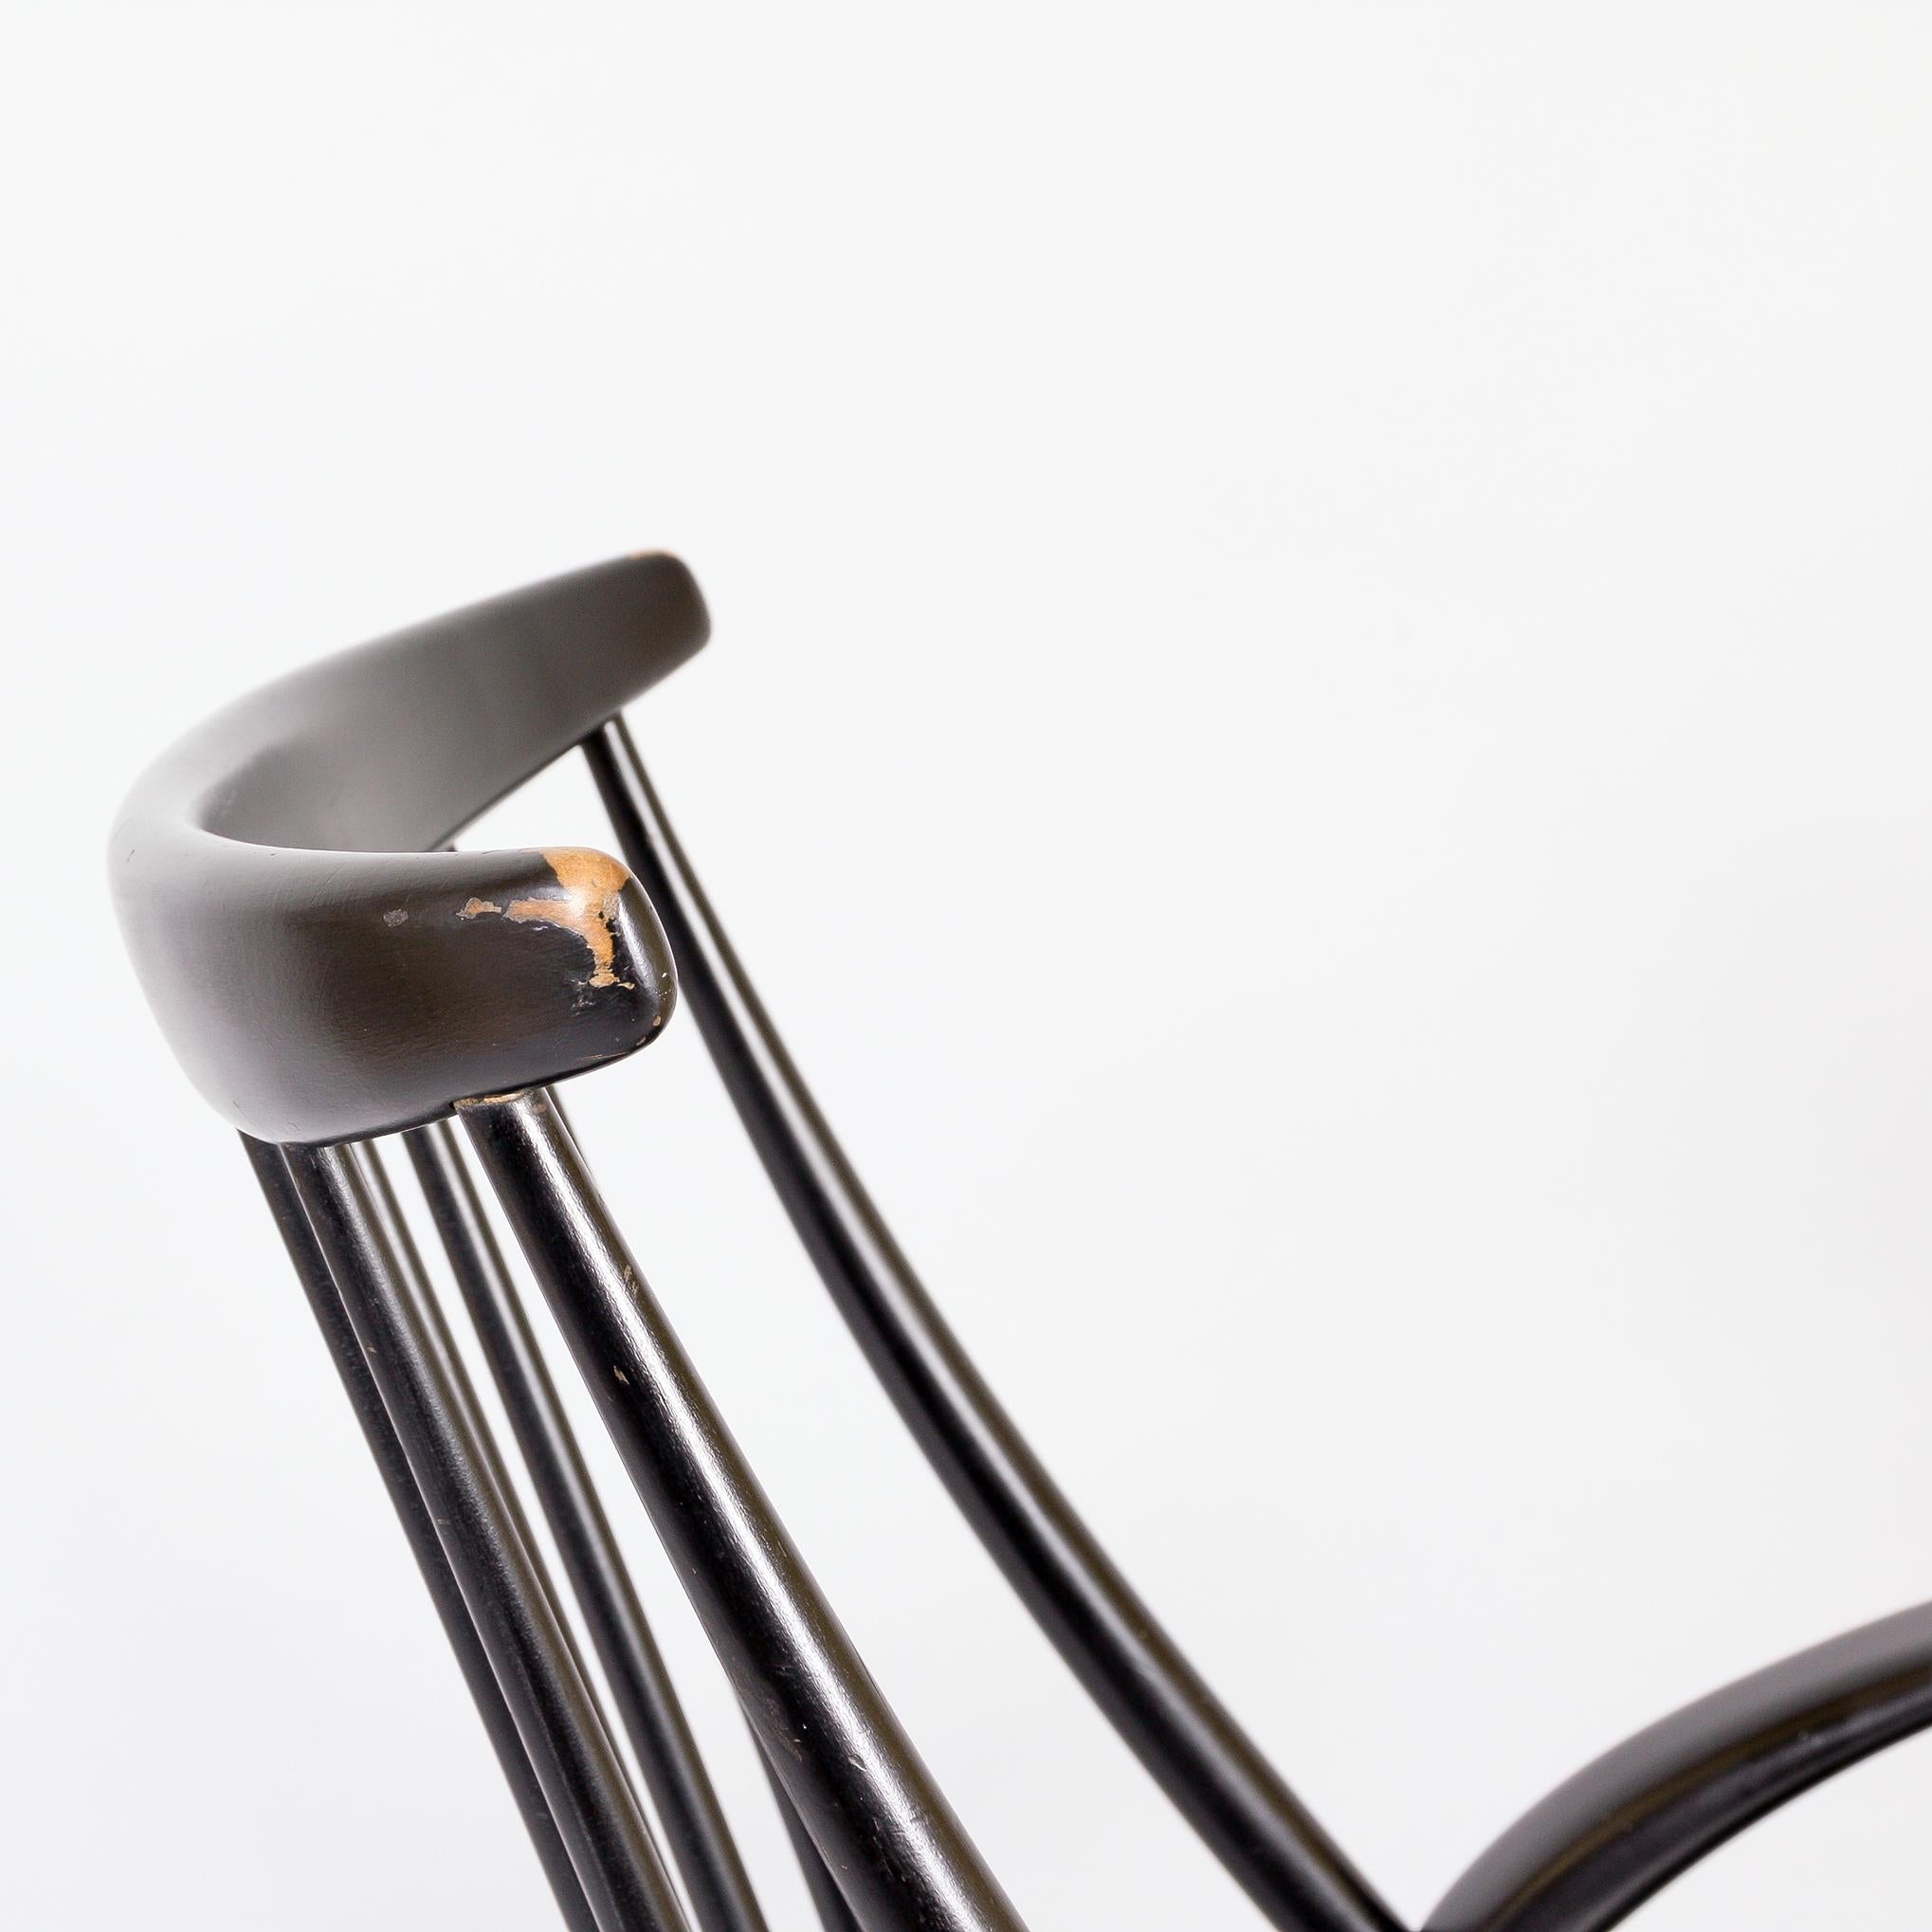 Wood Illum Wikkelso Gyngestol No. 3 Rocking Chair by Niels Eilerson